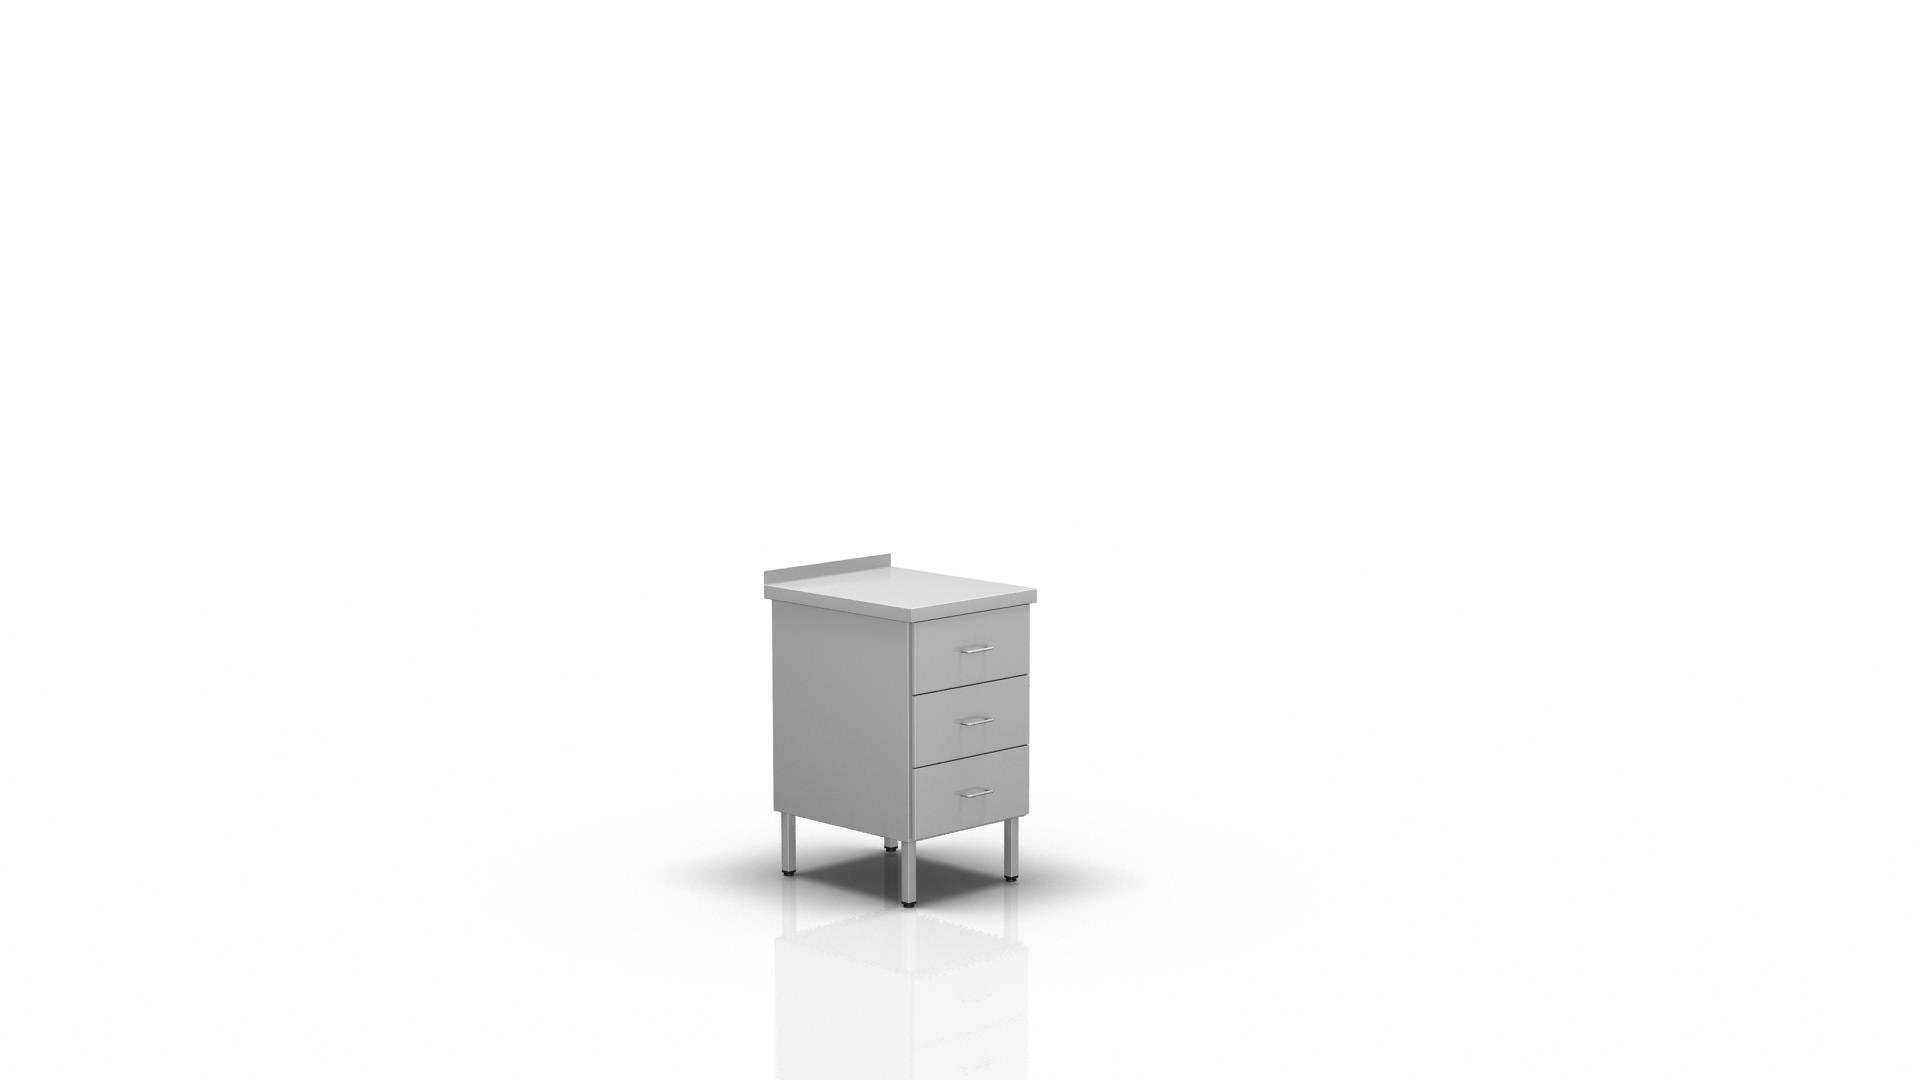 Three-drawer standing cabinet